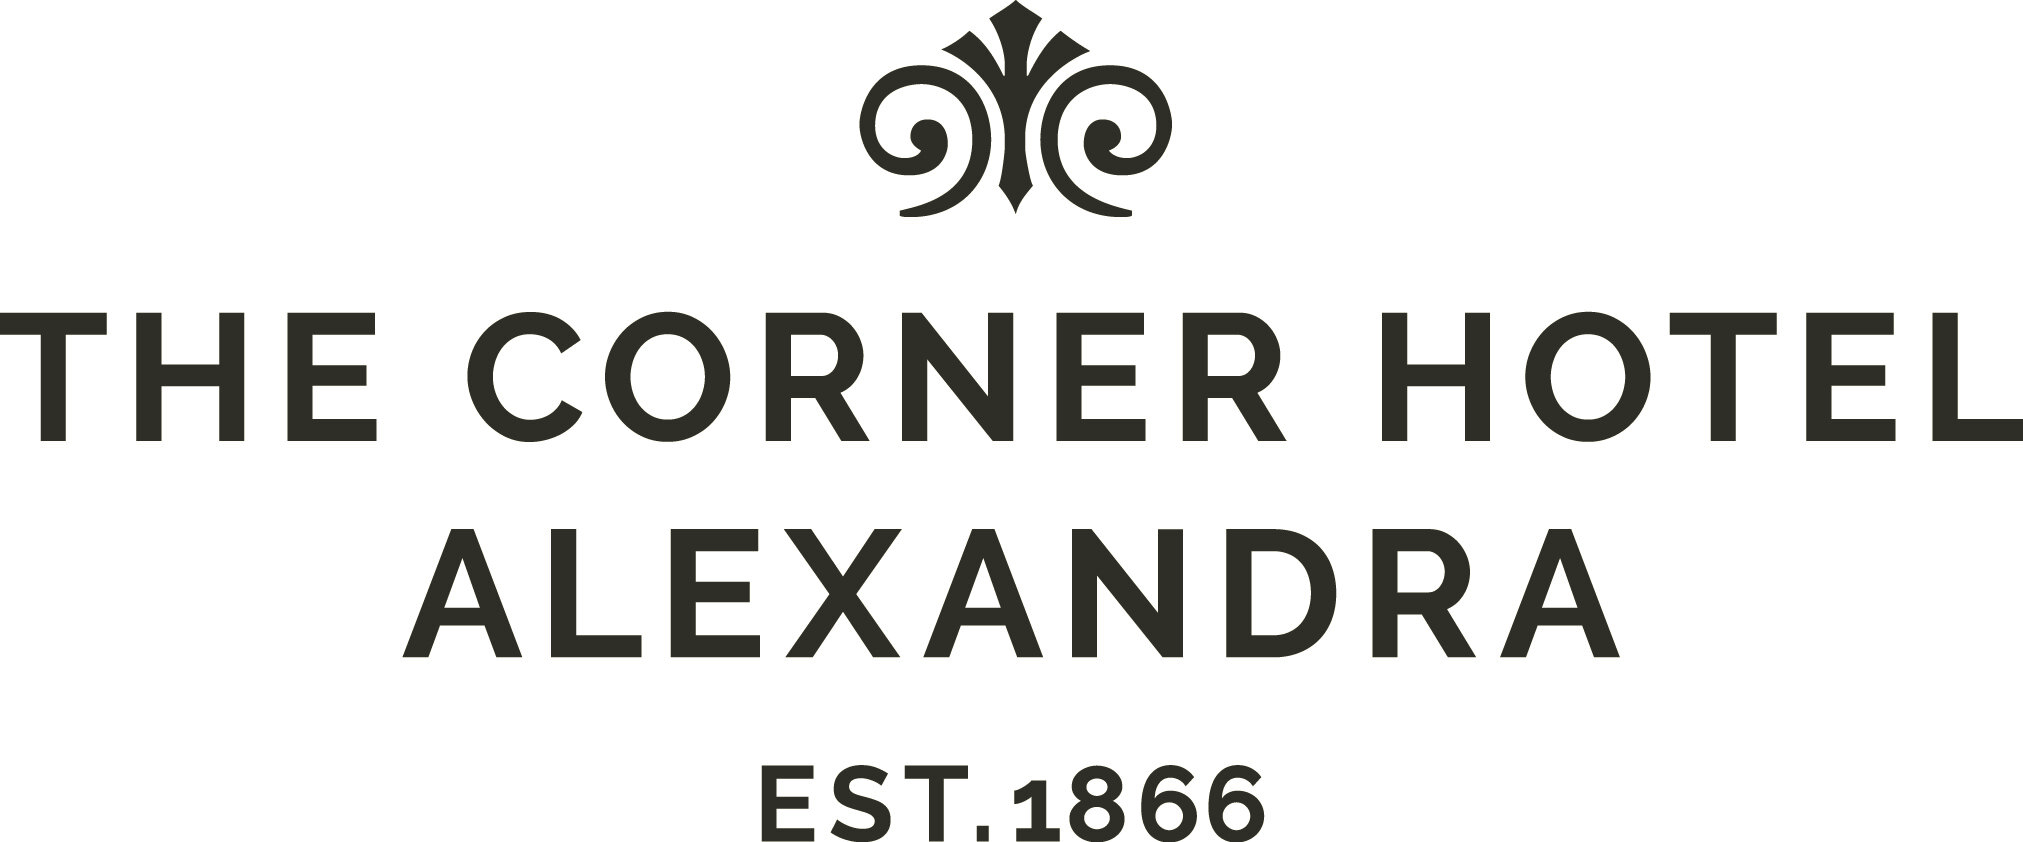 The Corner Hotel Alexandra